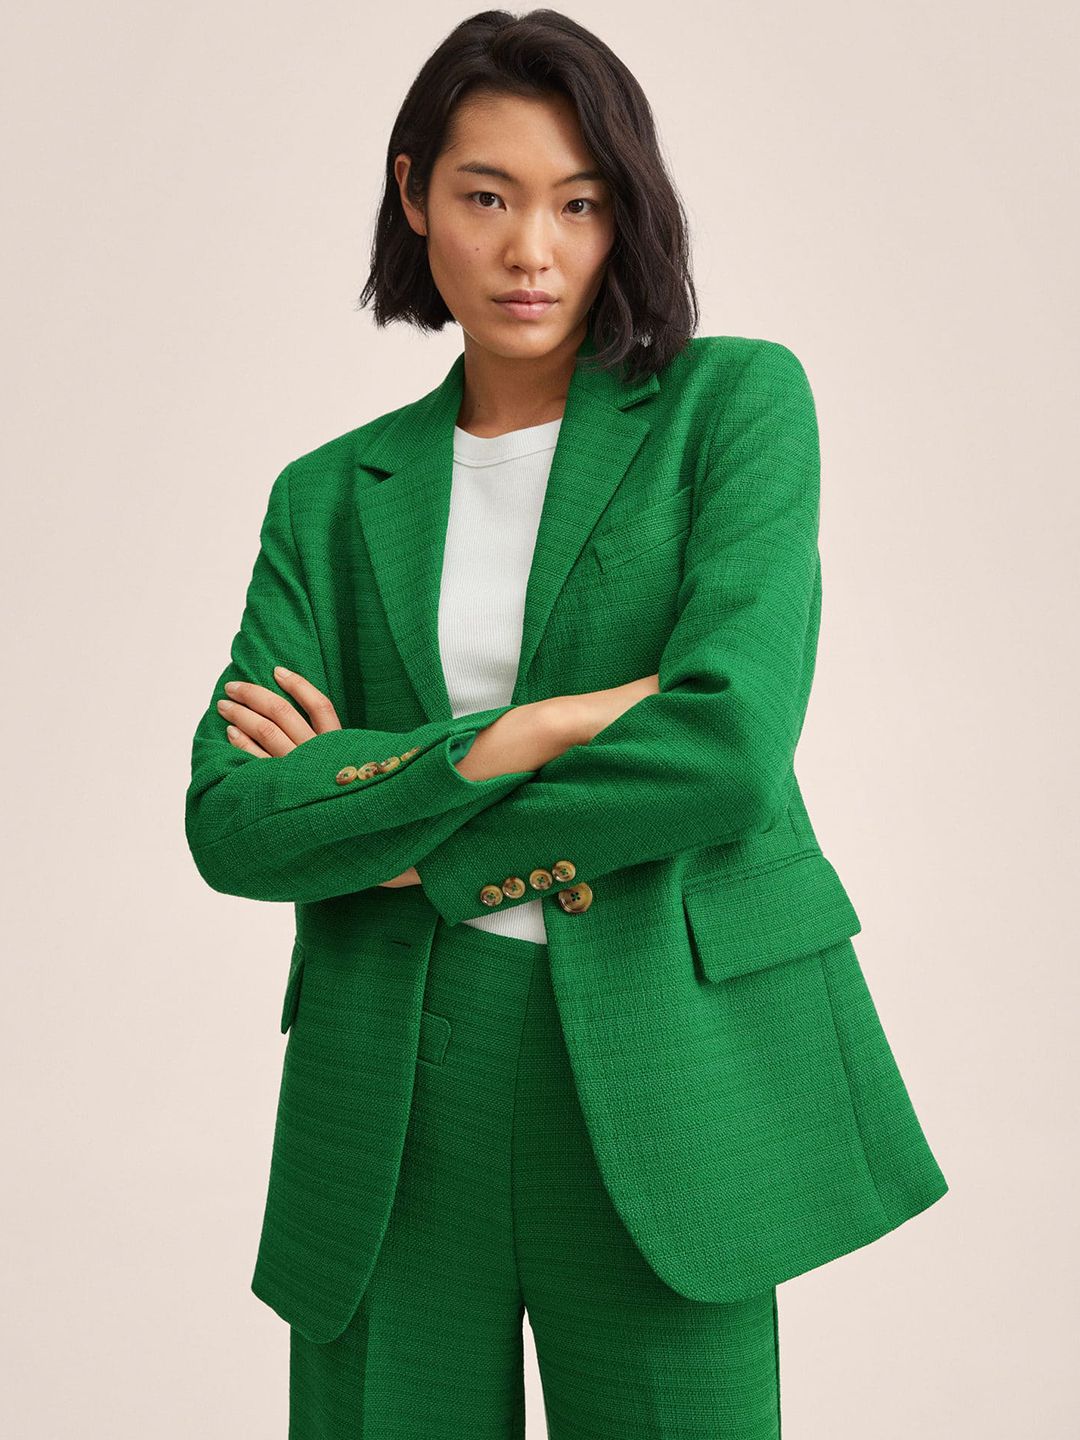 MANGO Women Green Self-Design Tweed Single-Breasted Blazer Price in India